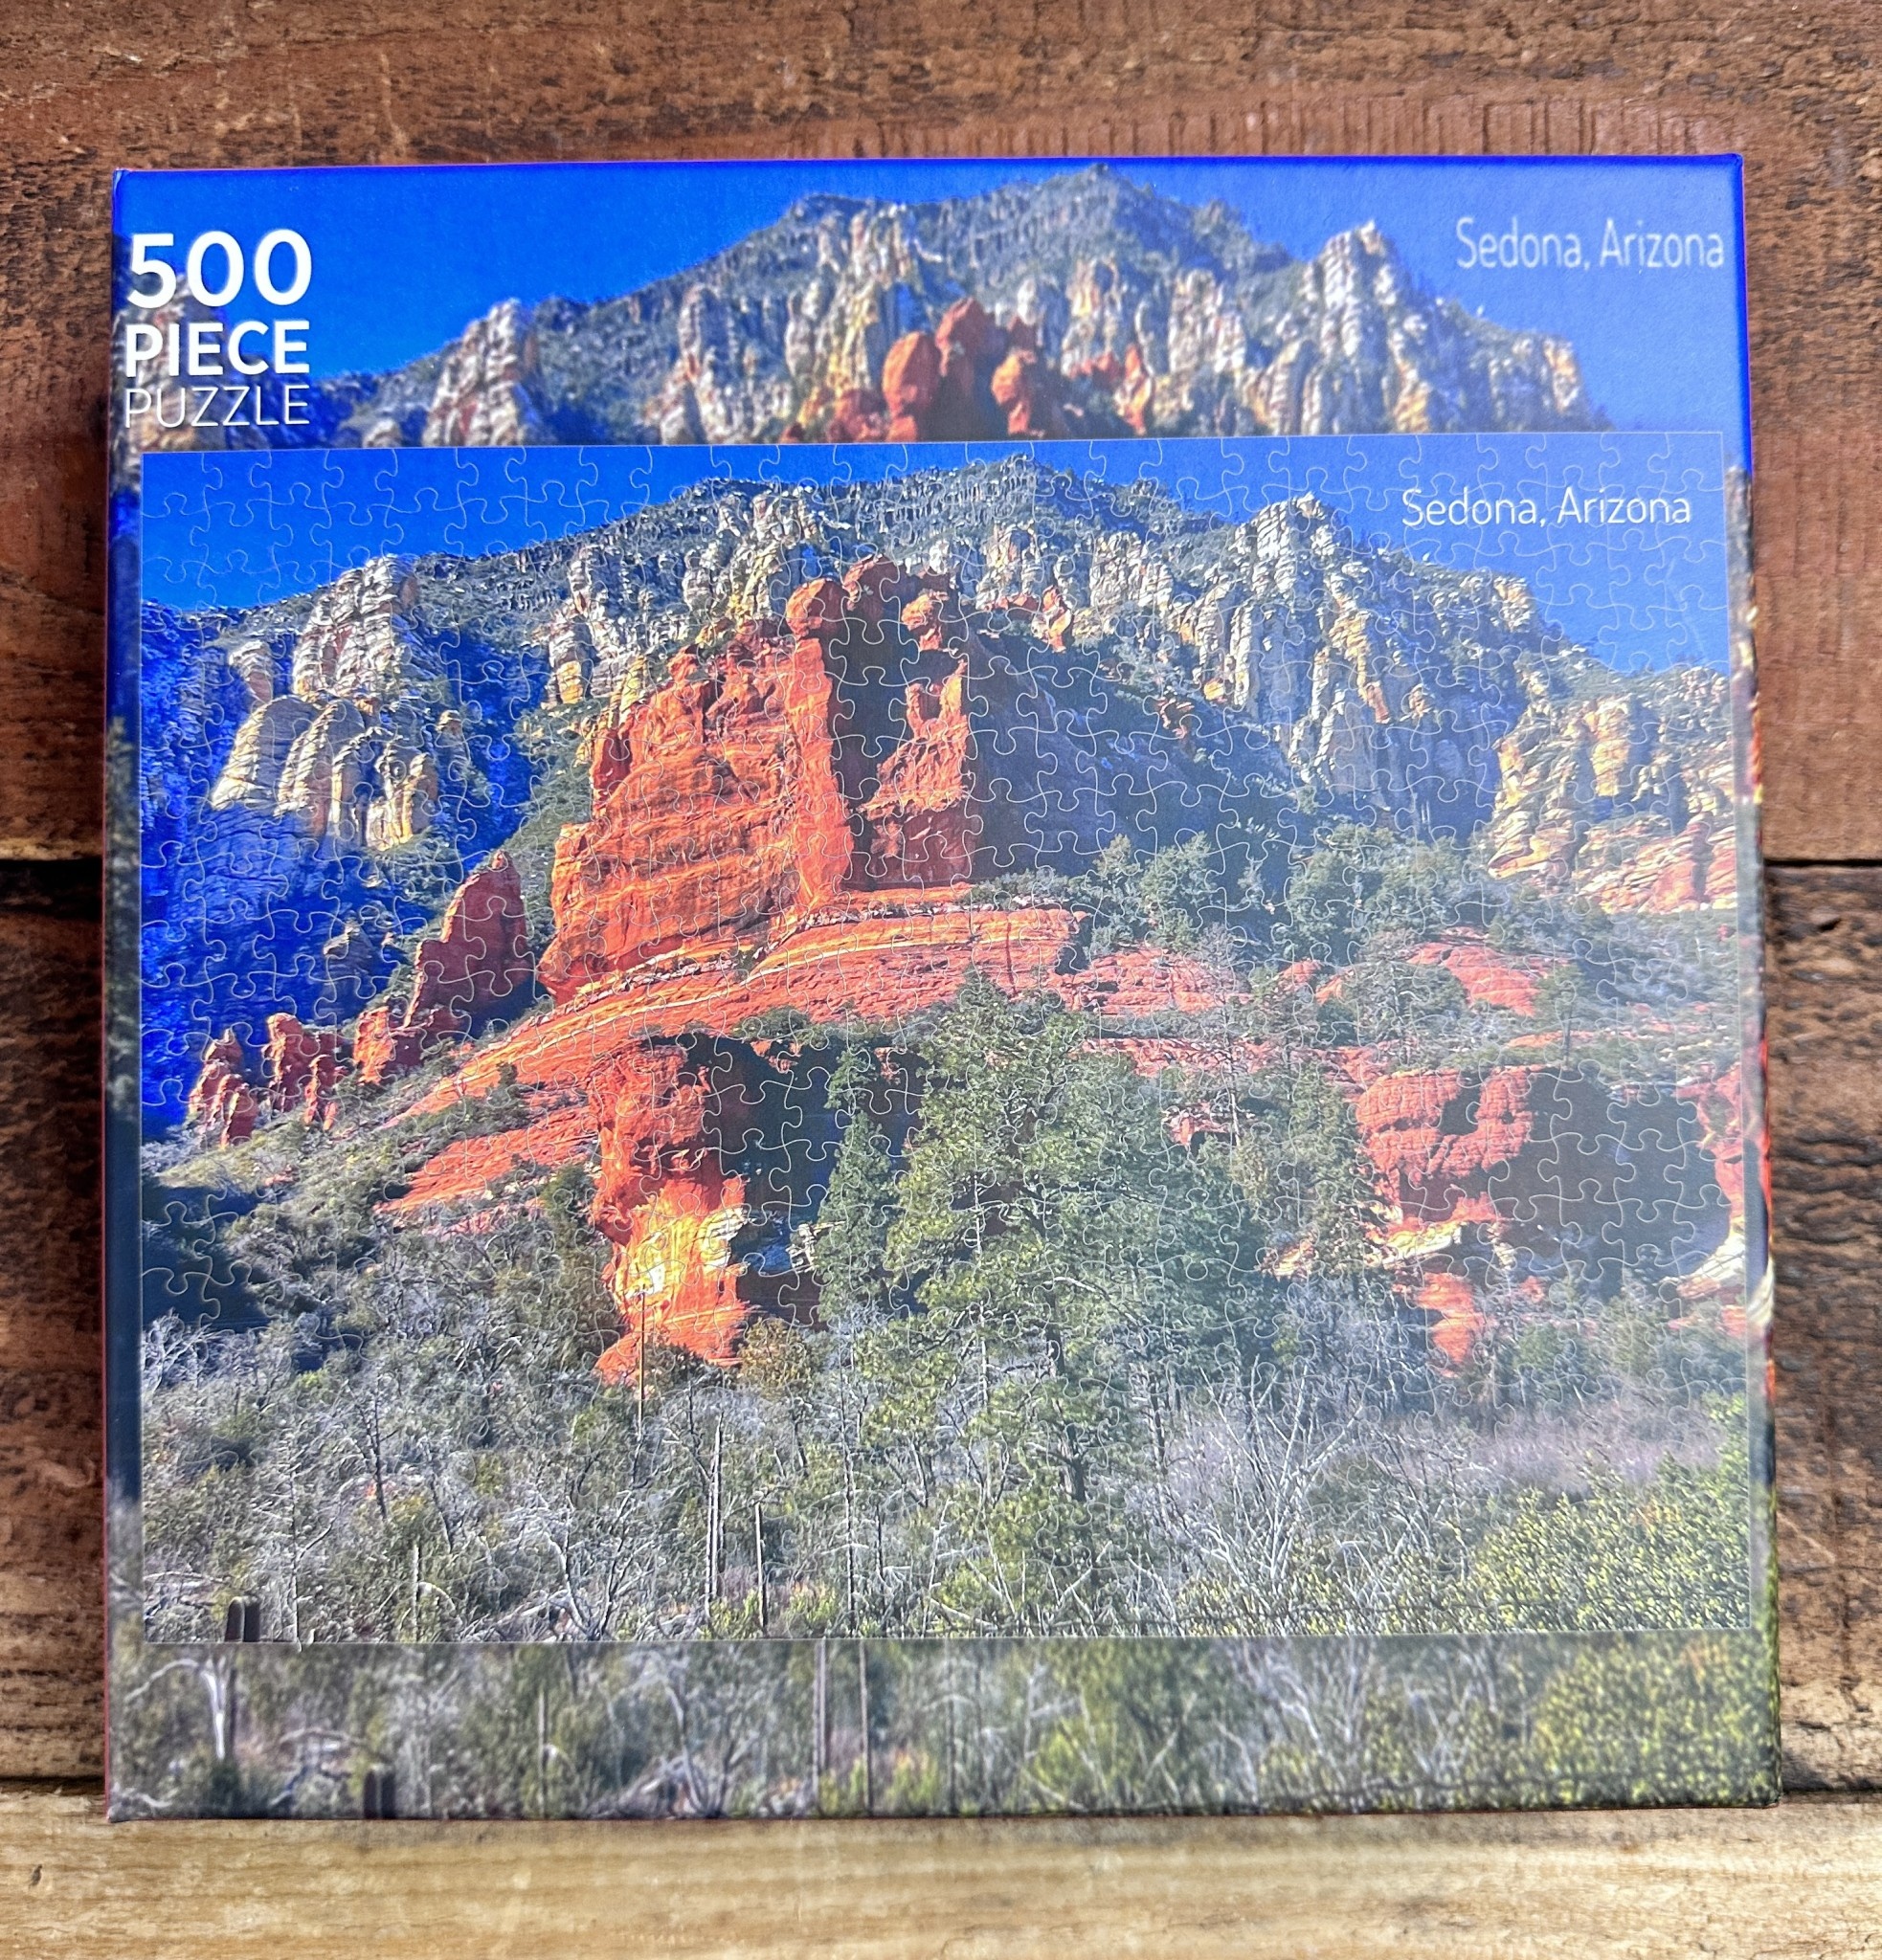 500 Piece Jigsaw Puzzle - Sedona, Arizona